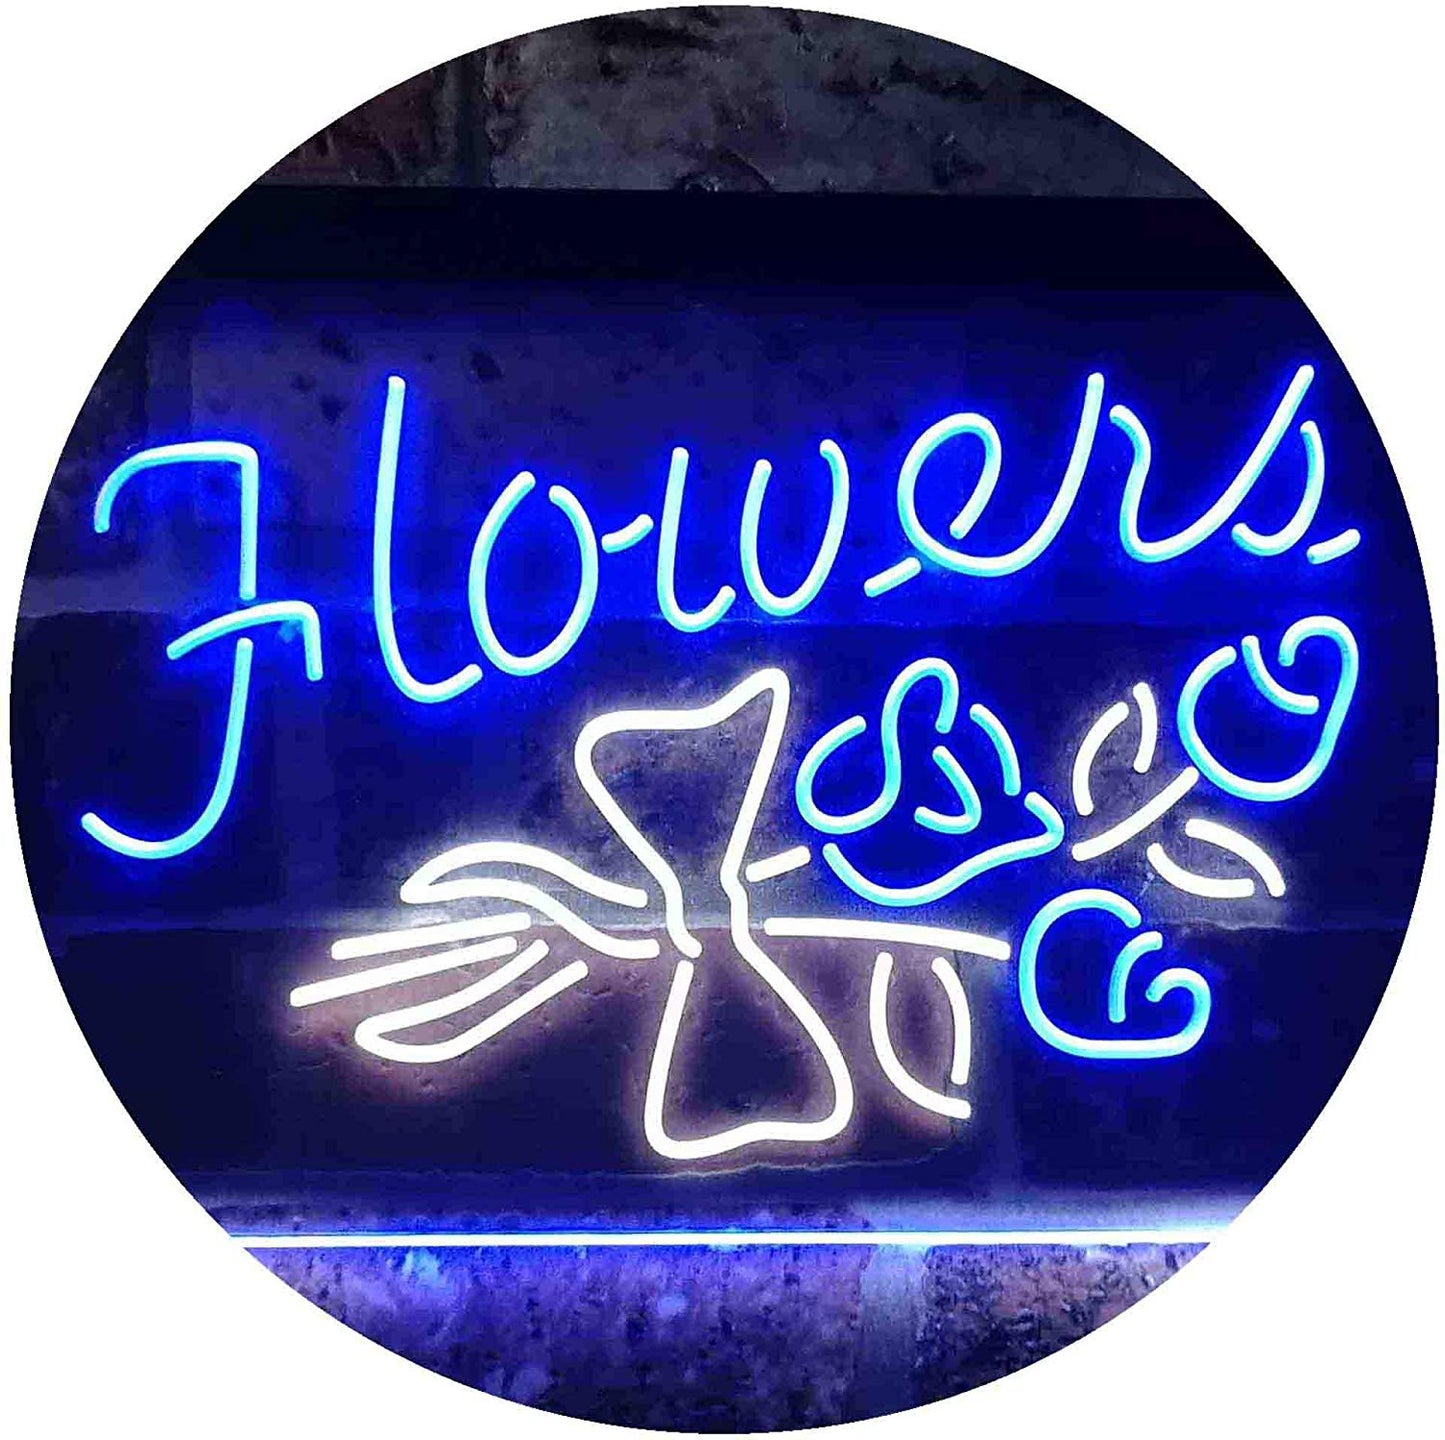 Buy Orchids Florist Flower Shop LED Neon Light Sign – Way Up Gifts